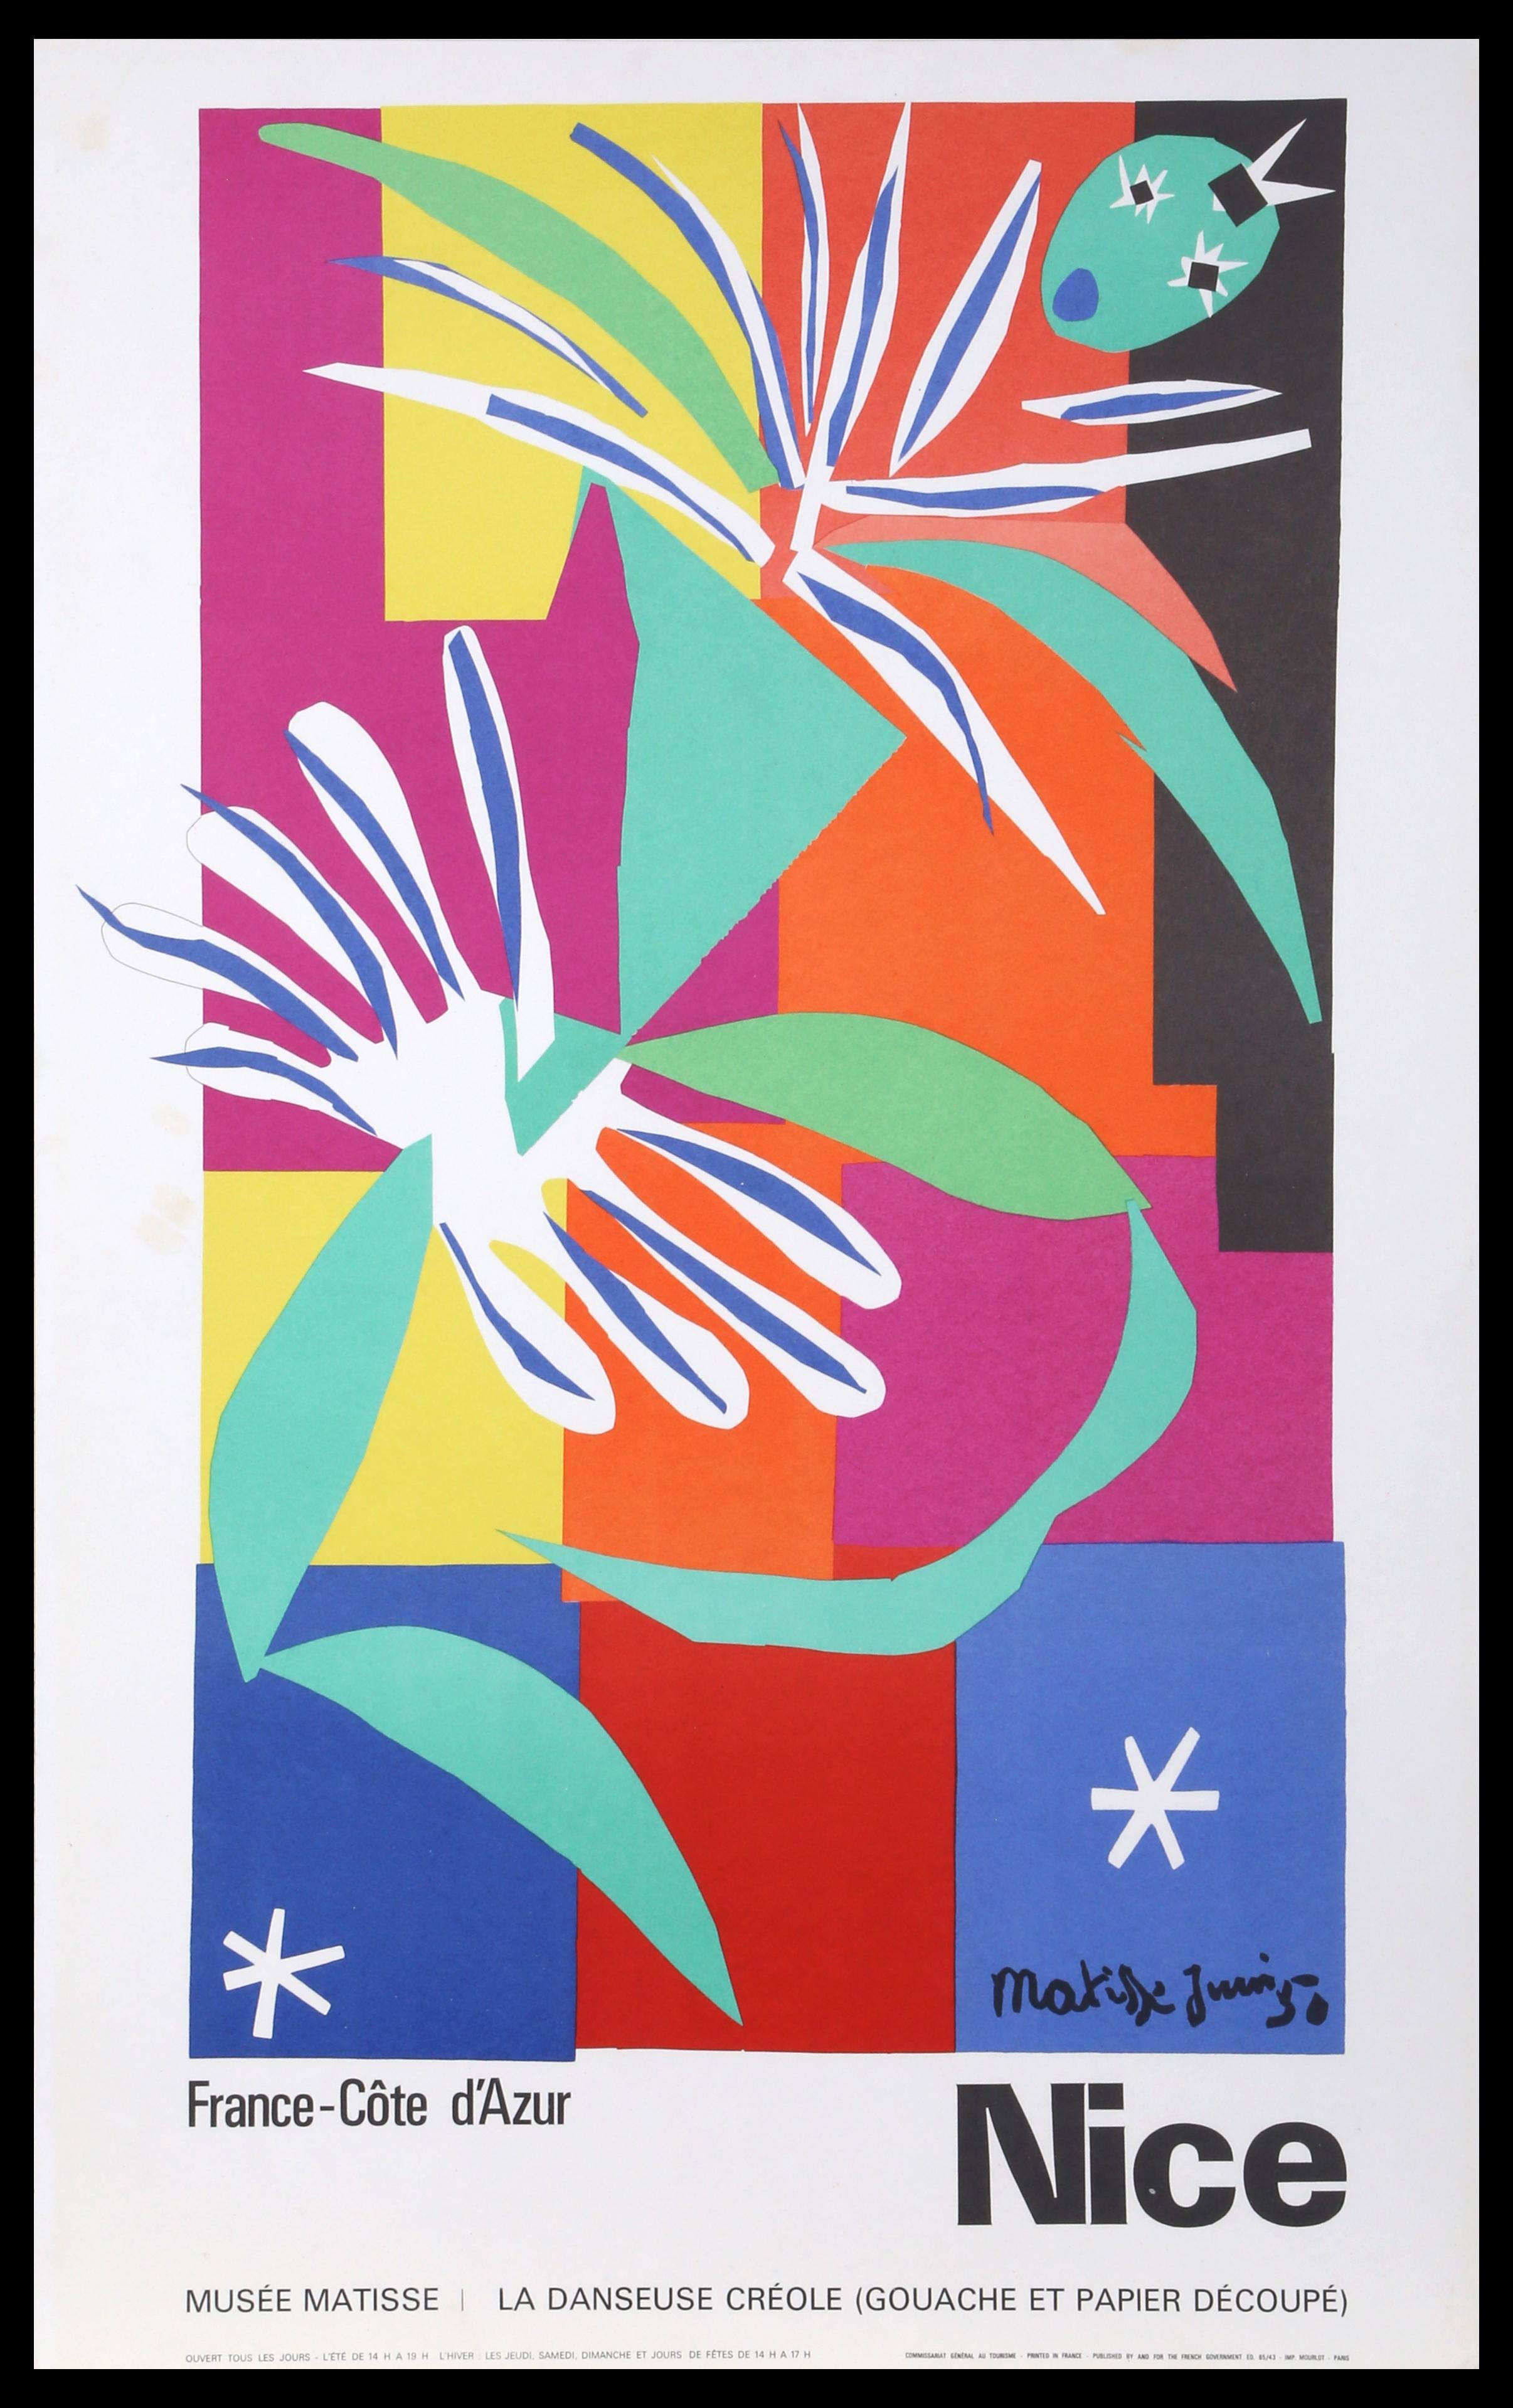 (after) Henri Matisse Figurative Print - Original vintage poster for Nice, Cote d'Azur - La Danseuse Creole by Matisse